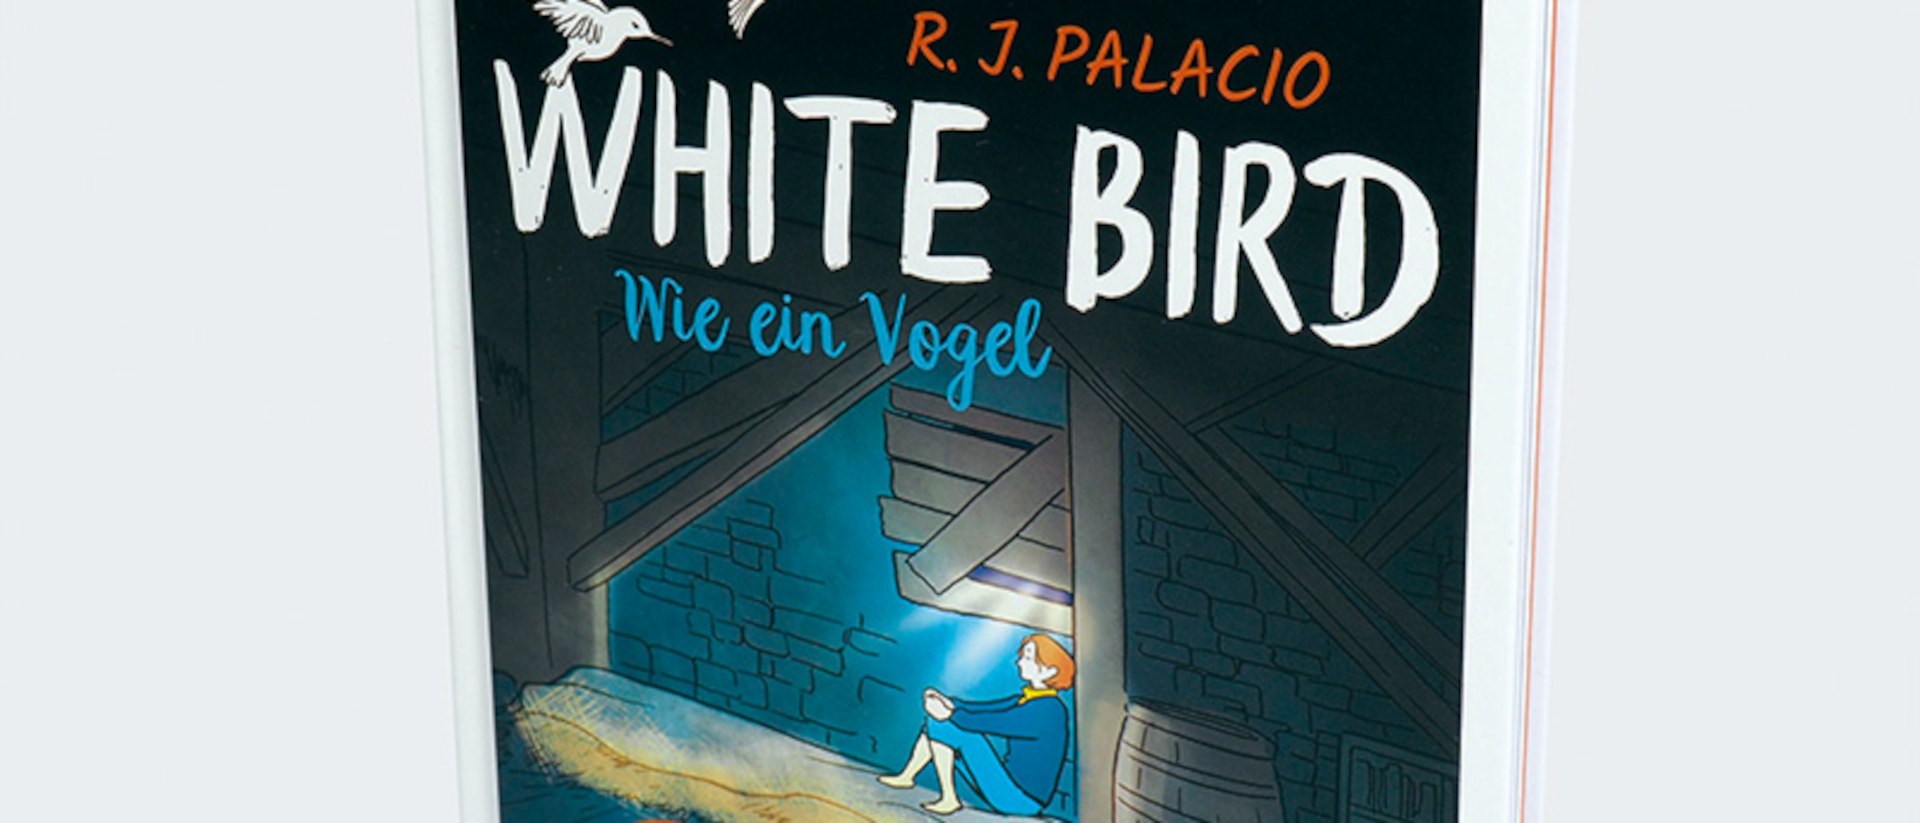 Das Cover der Graphic Novel "White Bird".